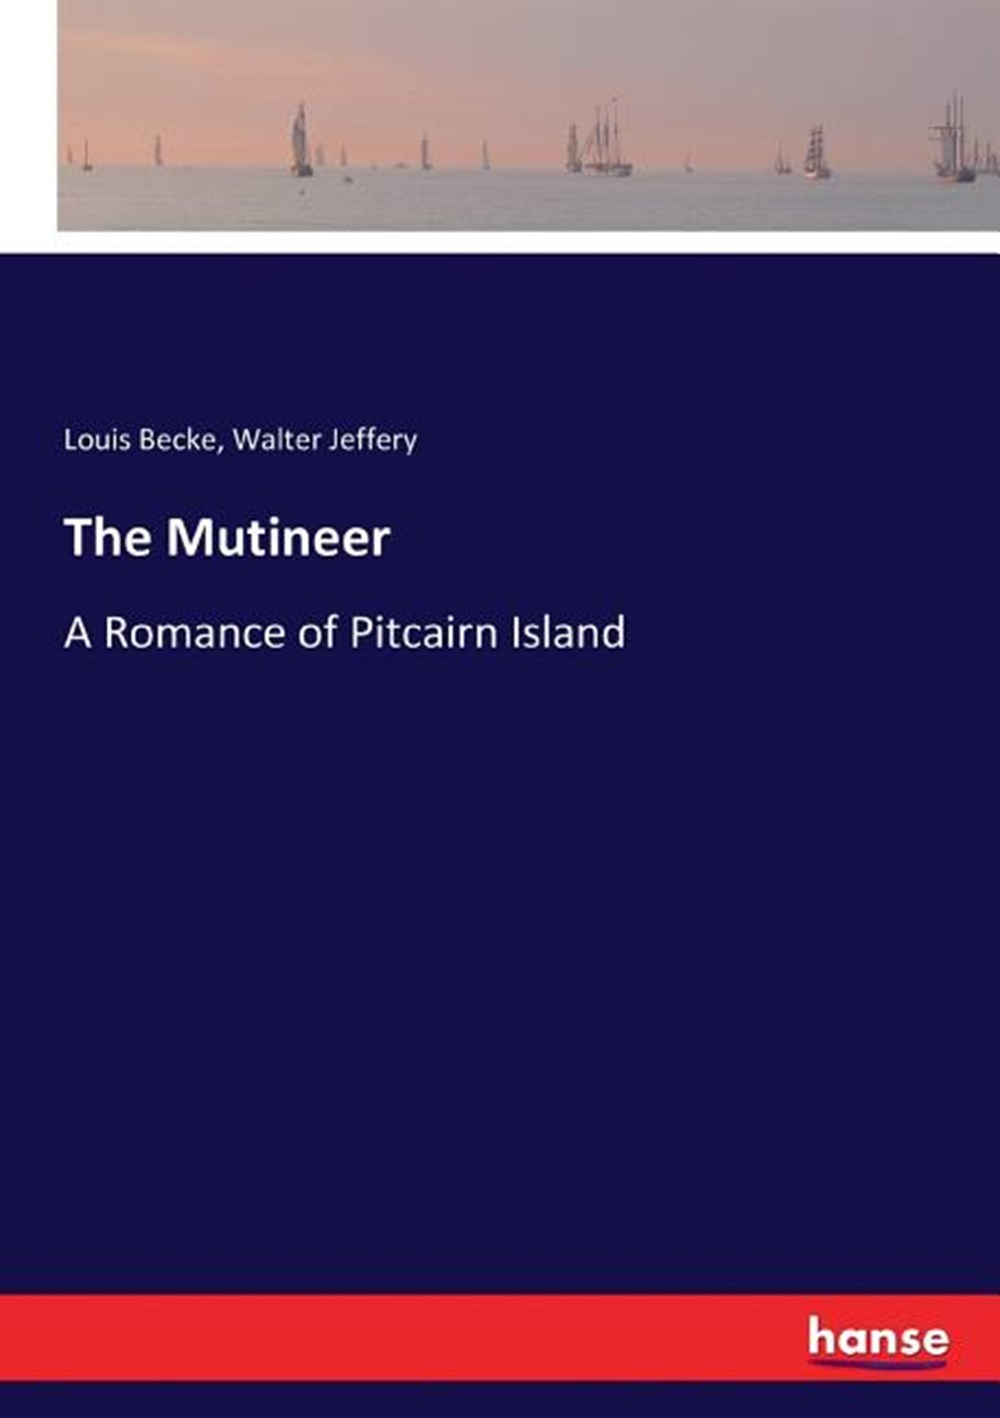 Mutineer: A Romance of Pitcairn Island